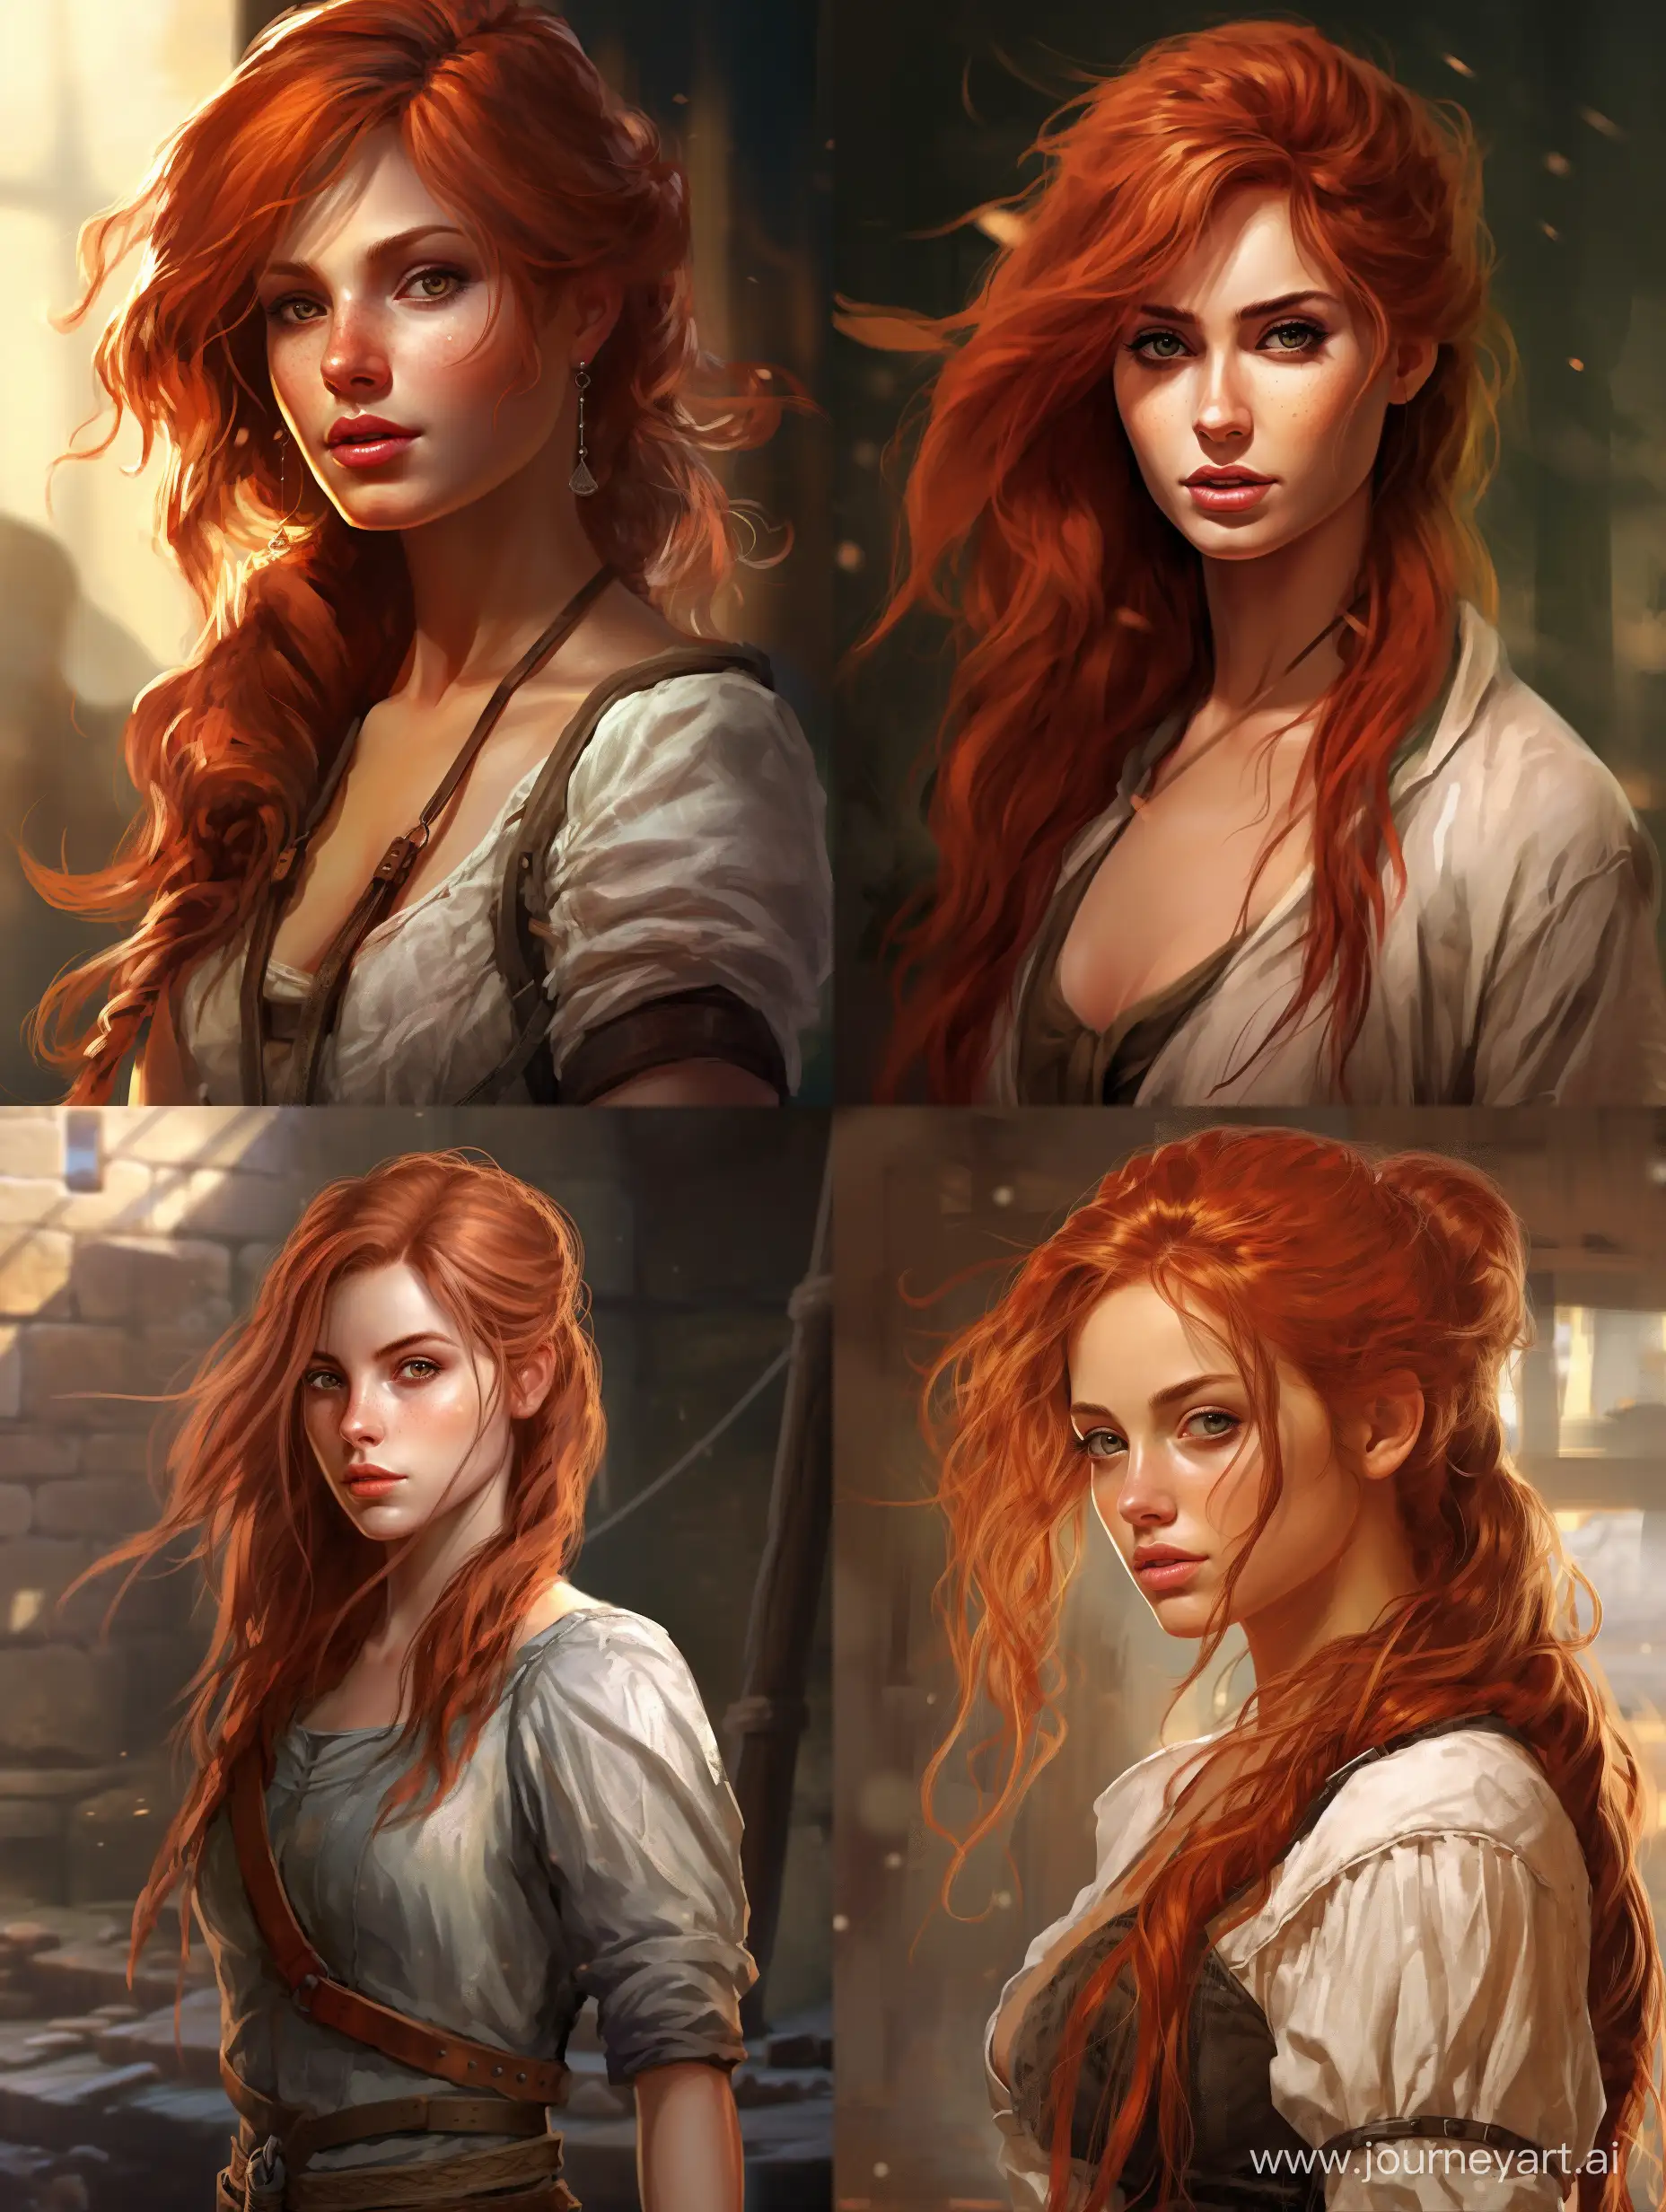 redhead mid length haircut female elf, brown eyes, slightly upward nose, thin lips, baldurs gate 3 style, fantasy